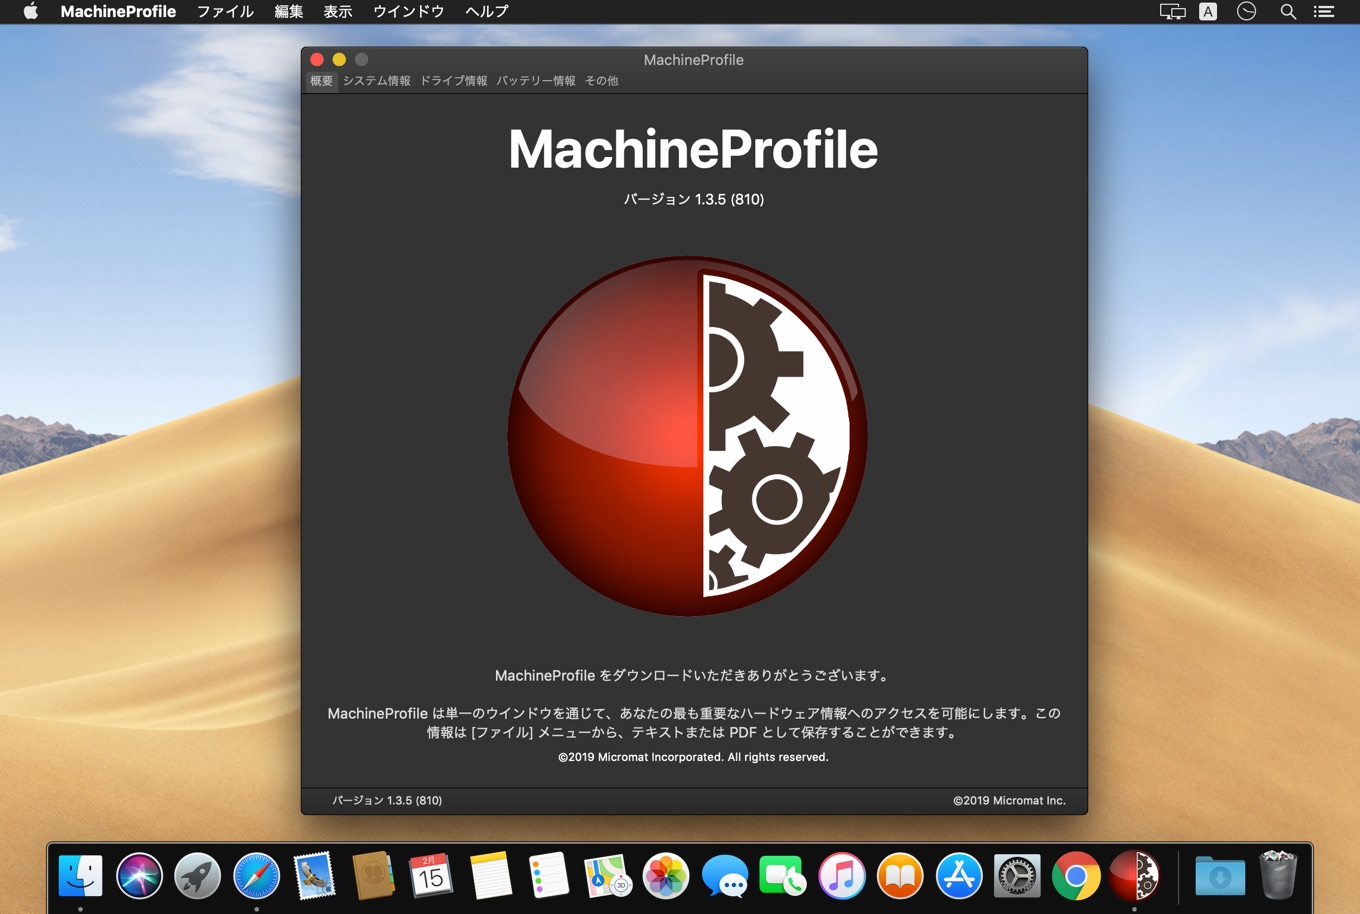 MachineProfile v1.3.5